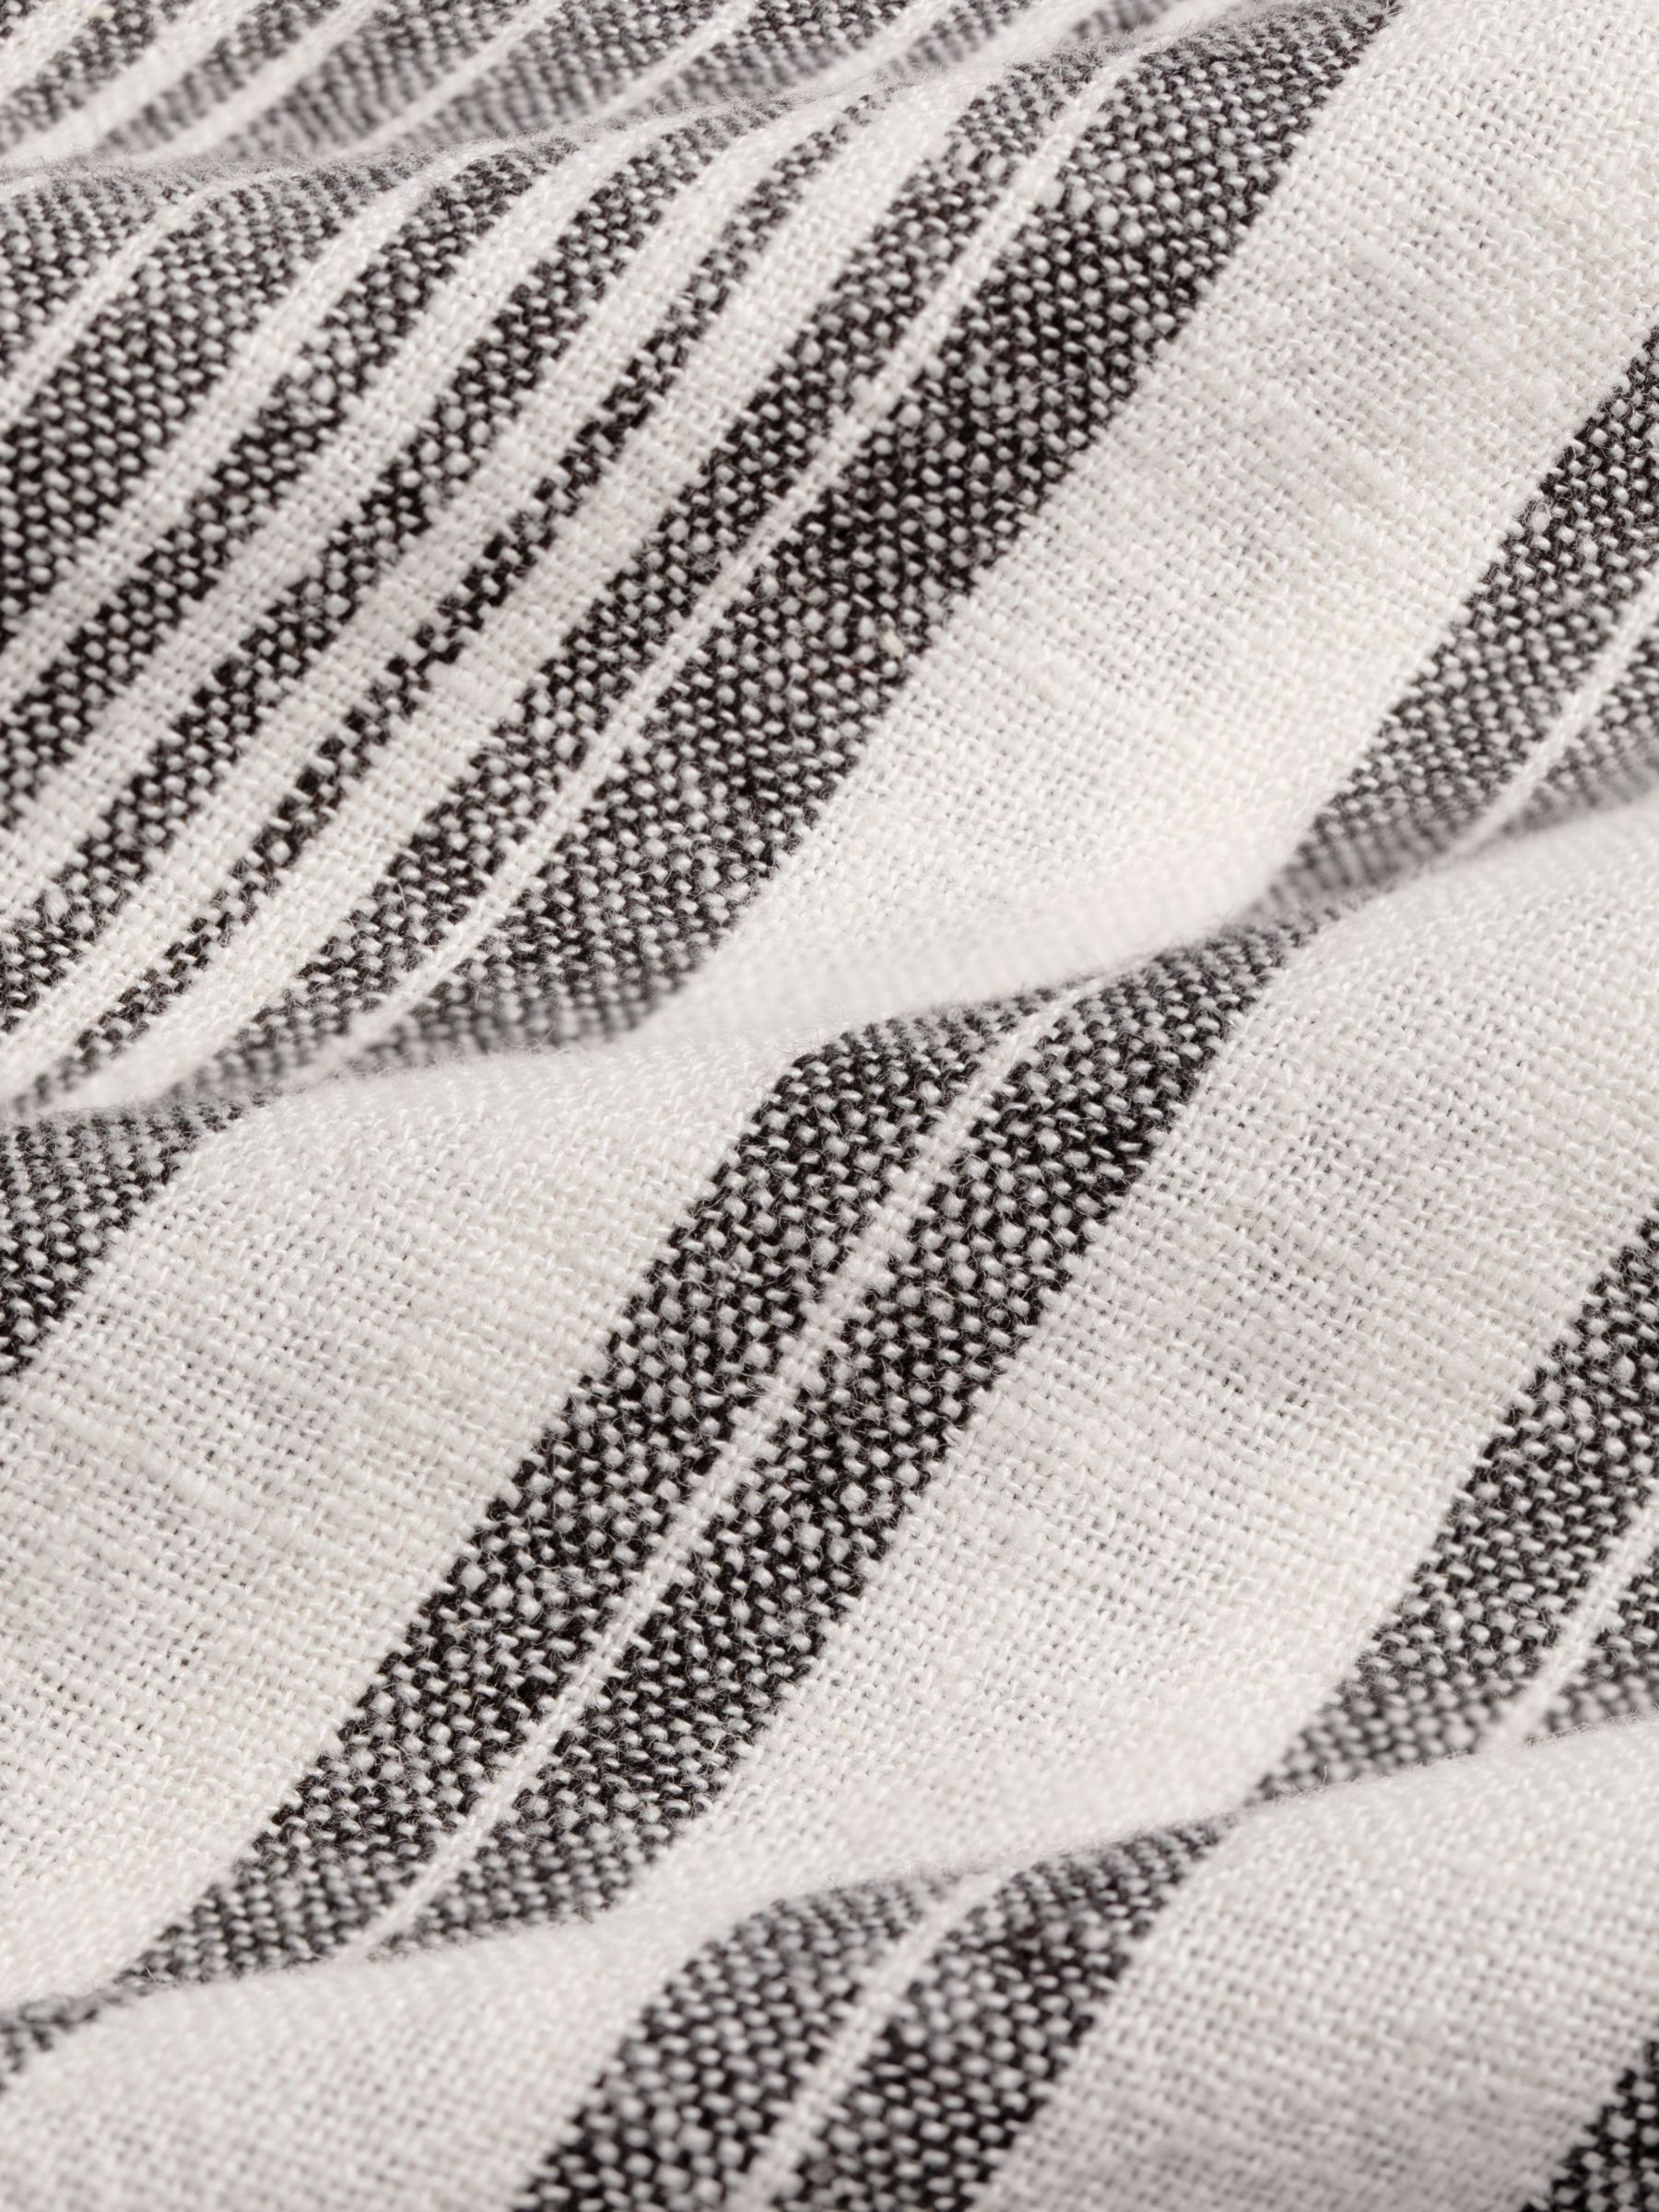 Chelsea Peers Linen Blend Stripe Shirt, Off White/Grey, L